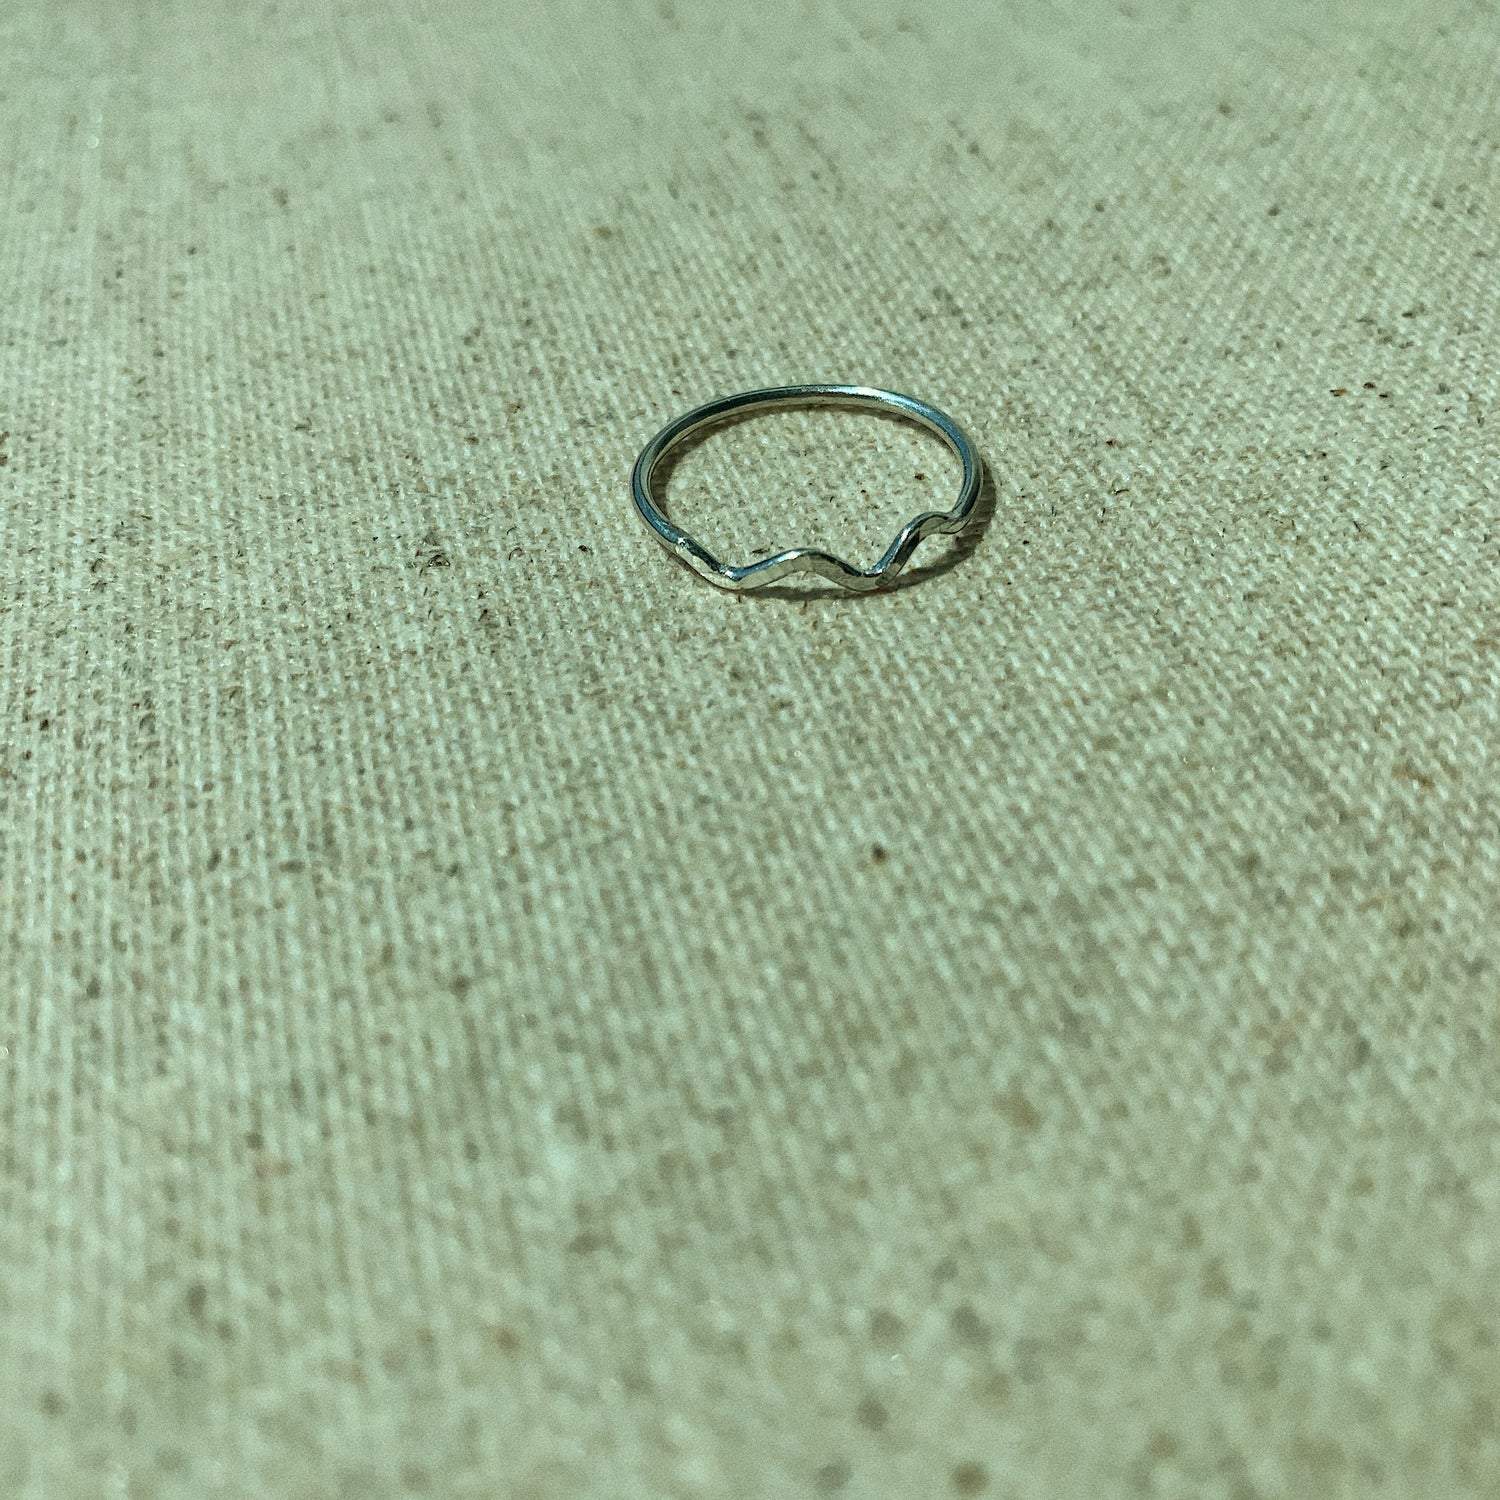 Maui ring (silver)